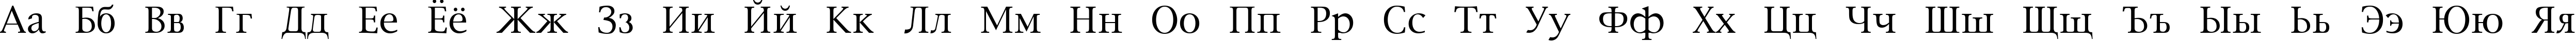 Пример написания русского алфавита шрифтом New York Plain:001.003